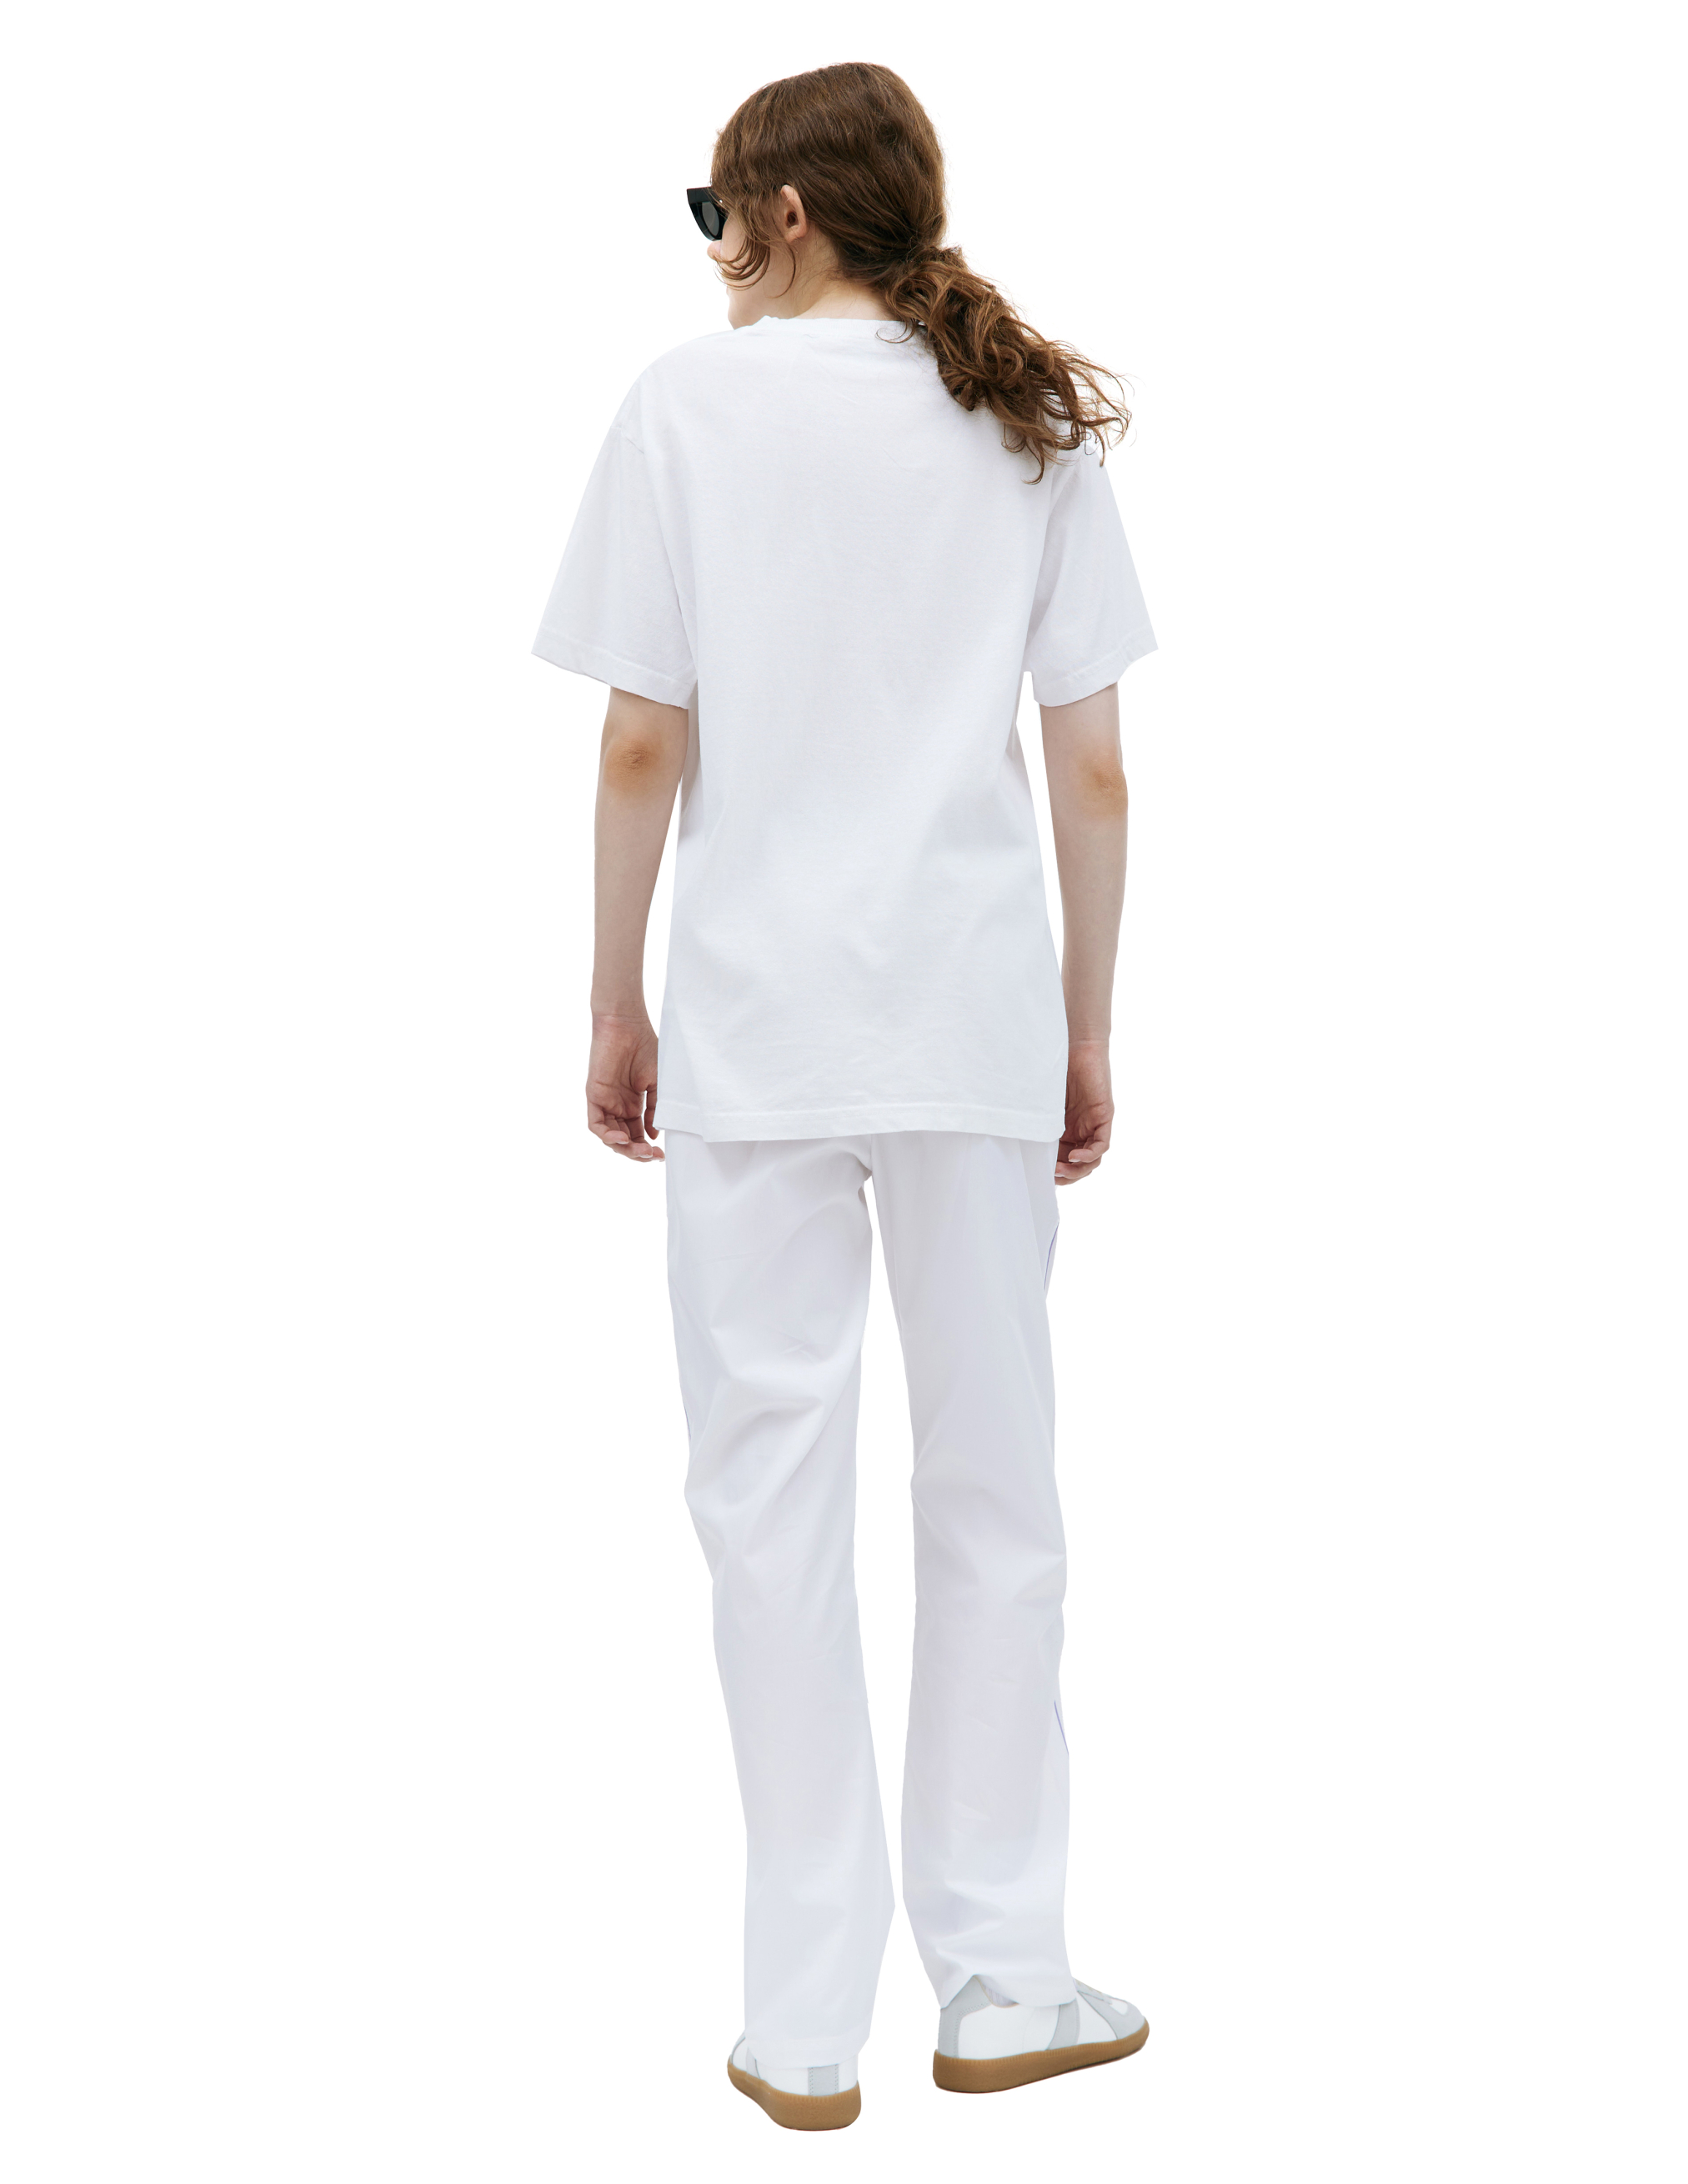 Белая футболка Vendome SPORTY & RICH TS852WH, размер S;M;L;XL - фото 3